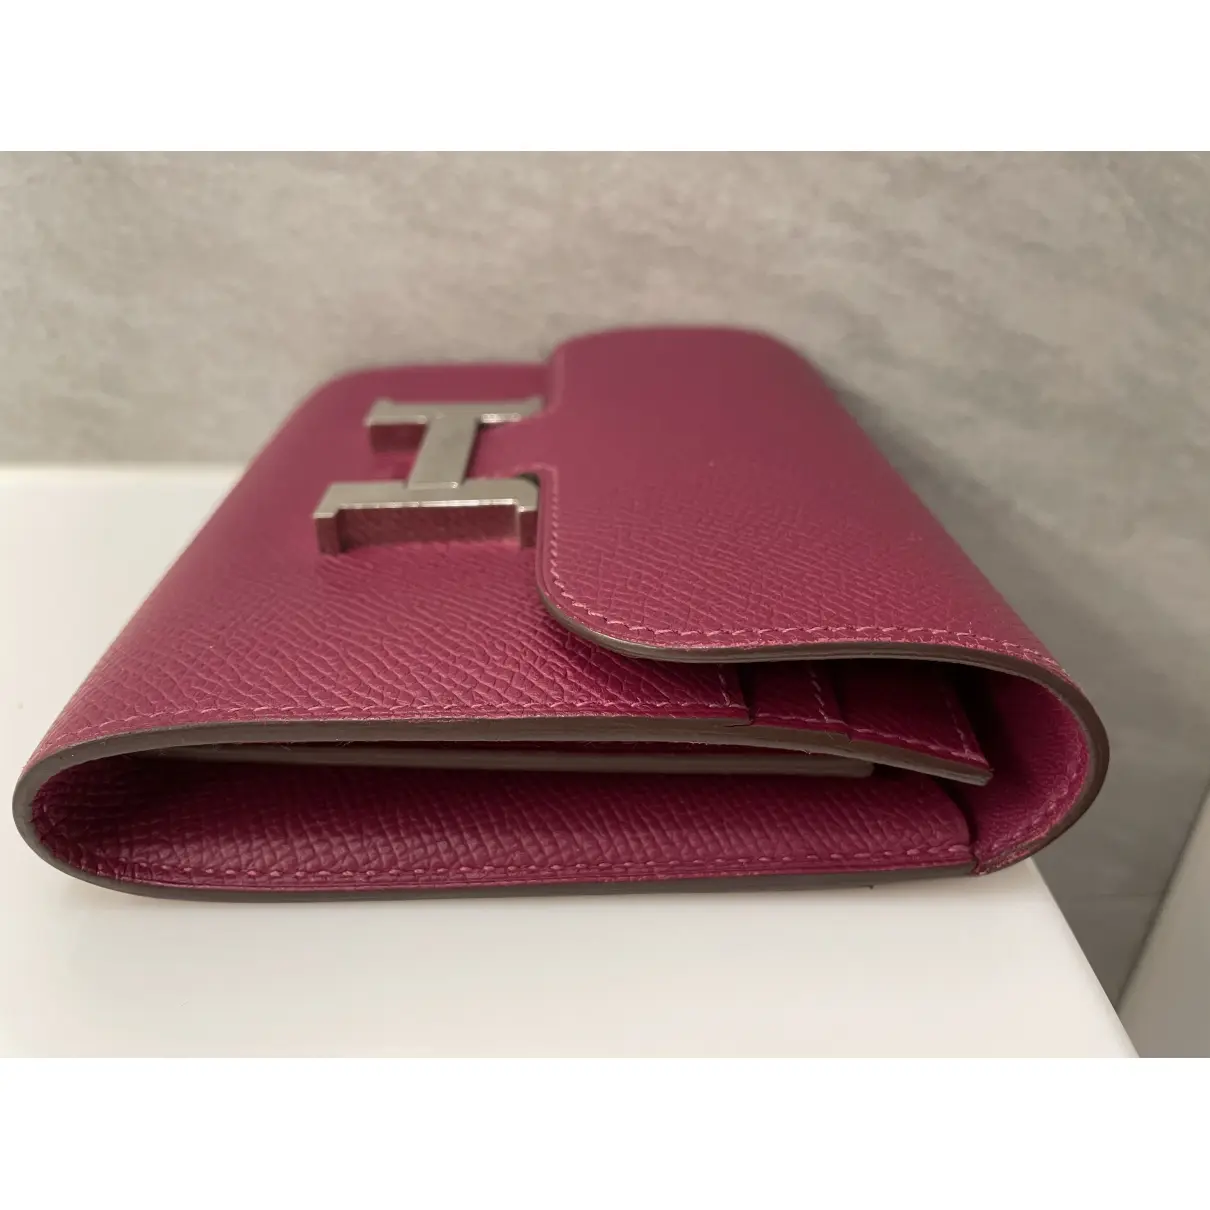 Buy Hermès Constance leather wallet online